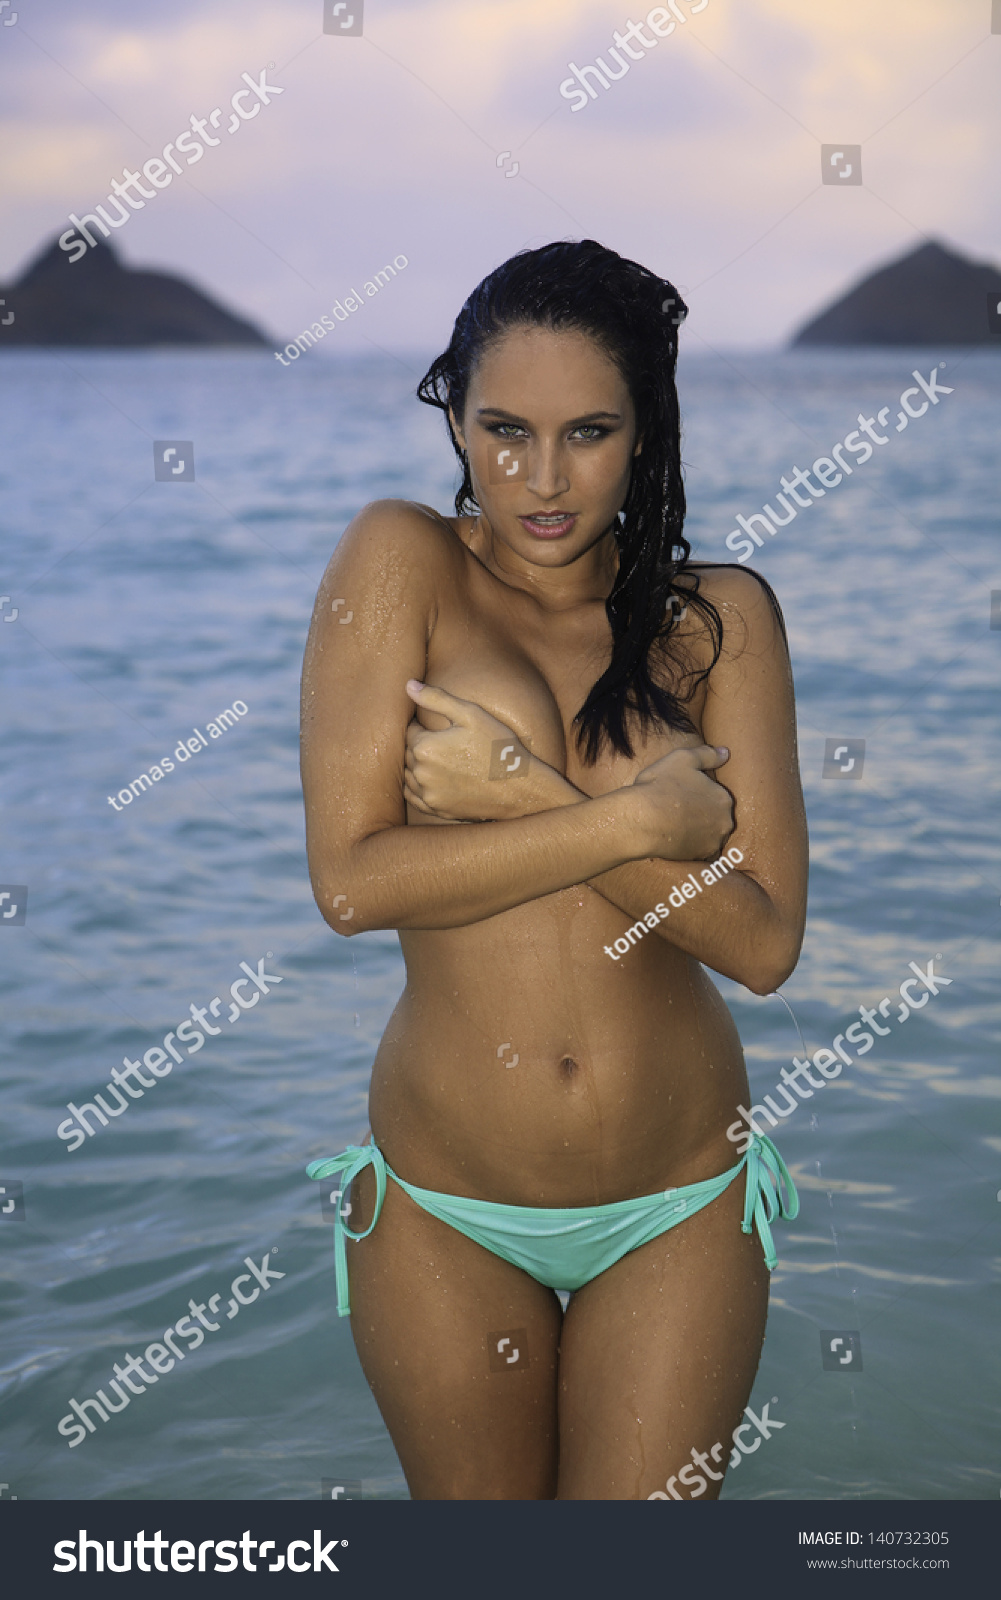 Naked girls beach photos Beautiful Topless Girl Bikini On Beach Stock Photo Edit Now 140732305